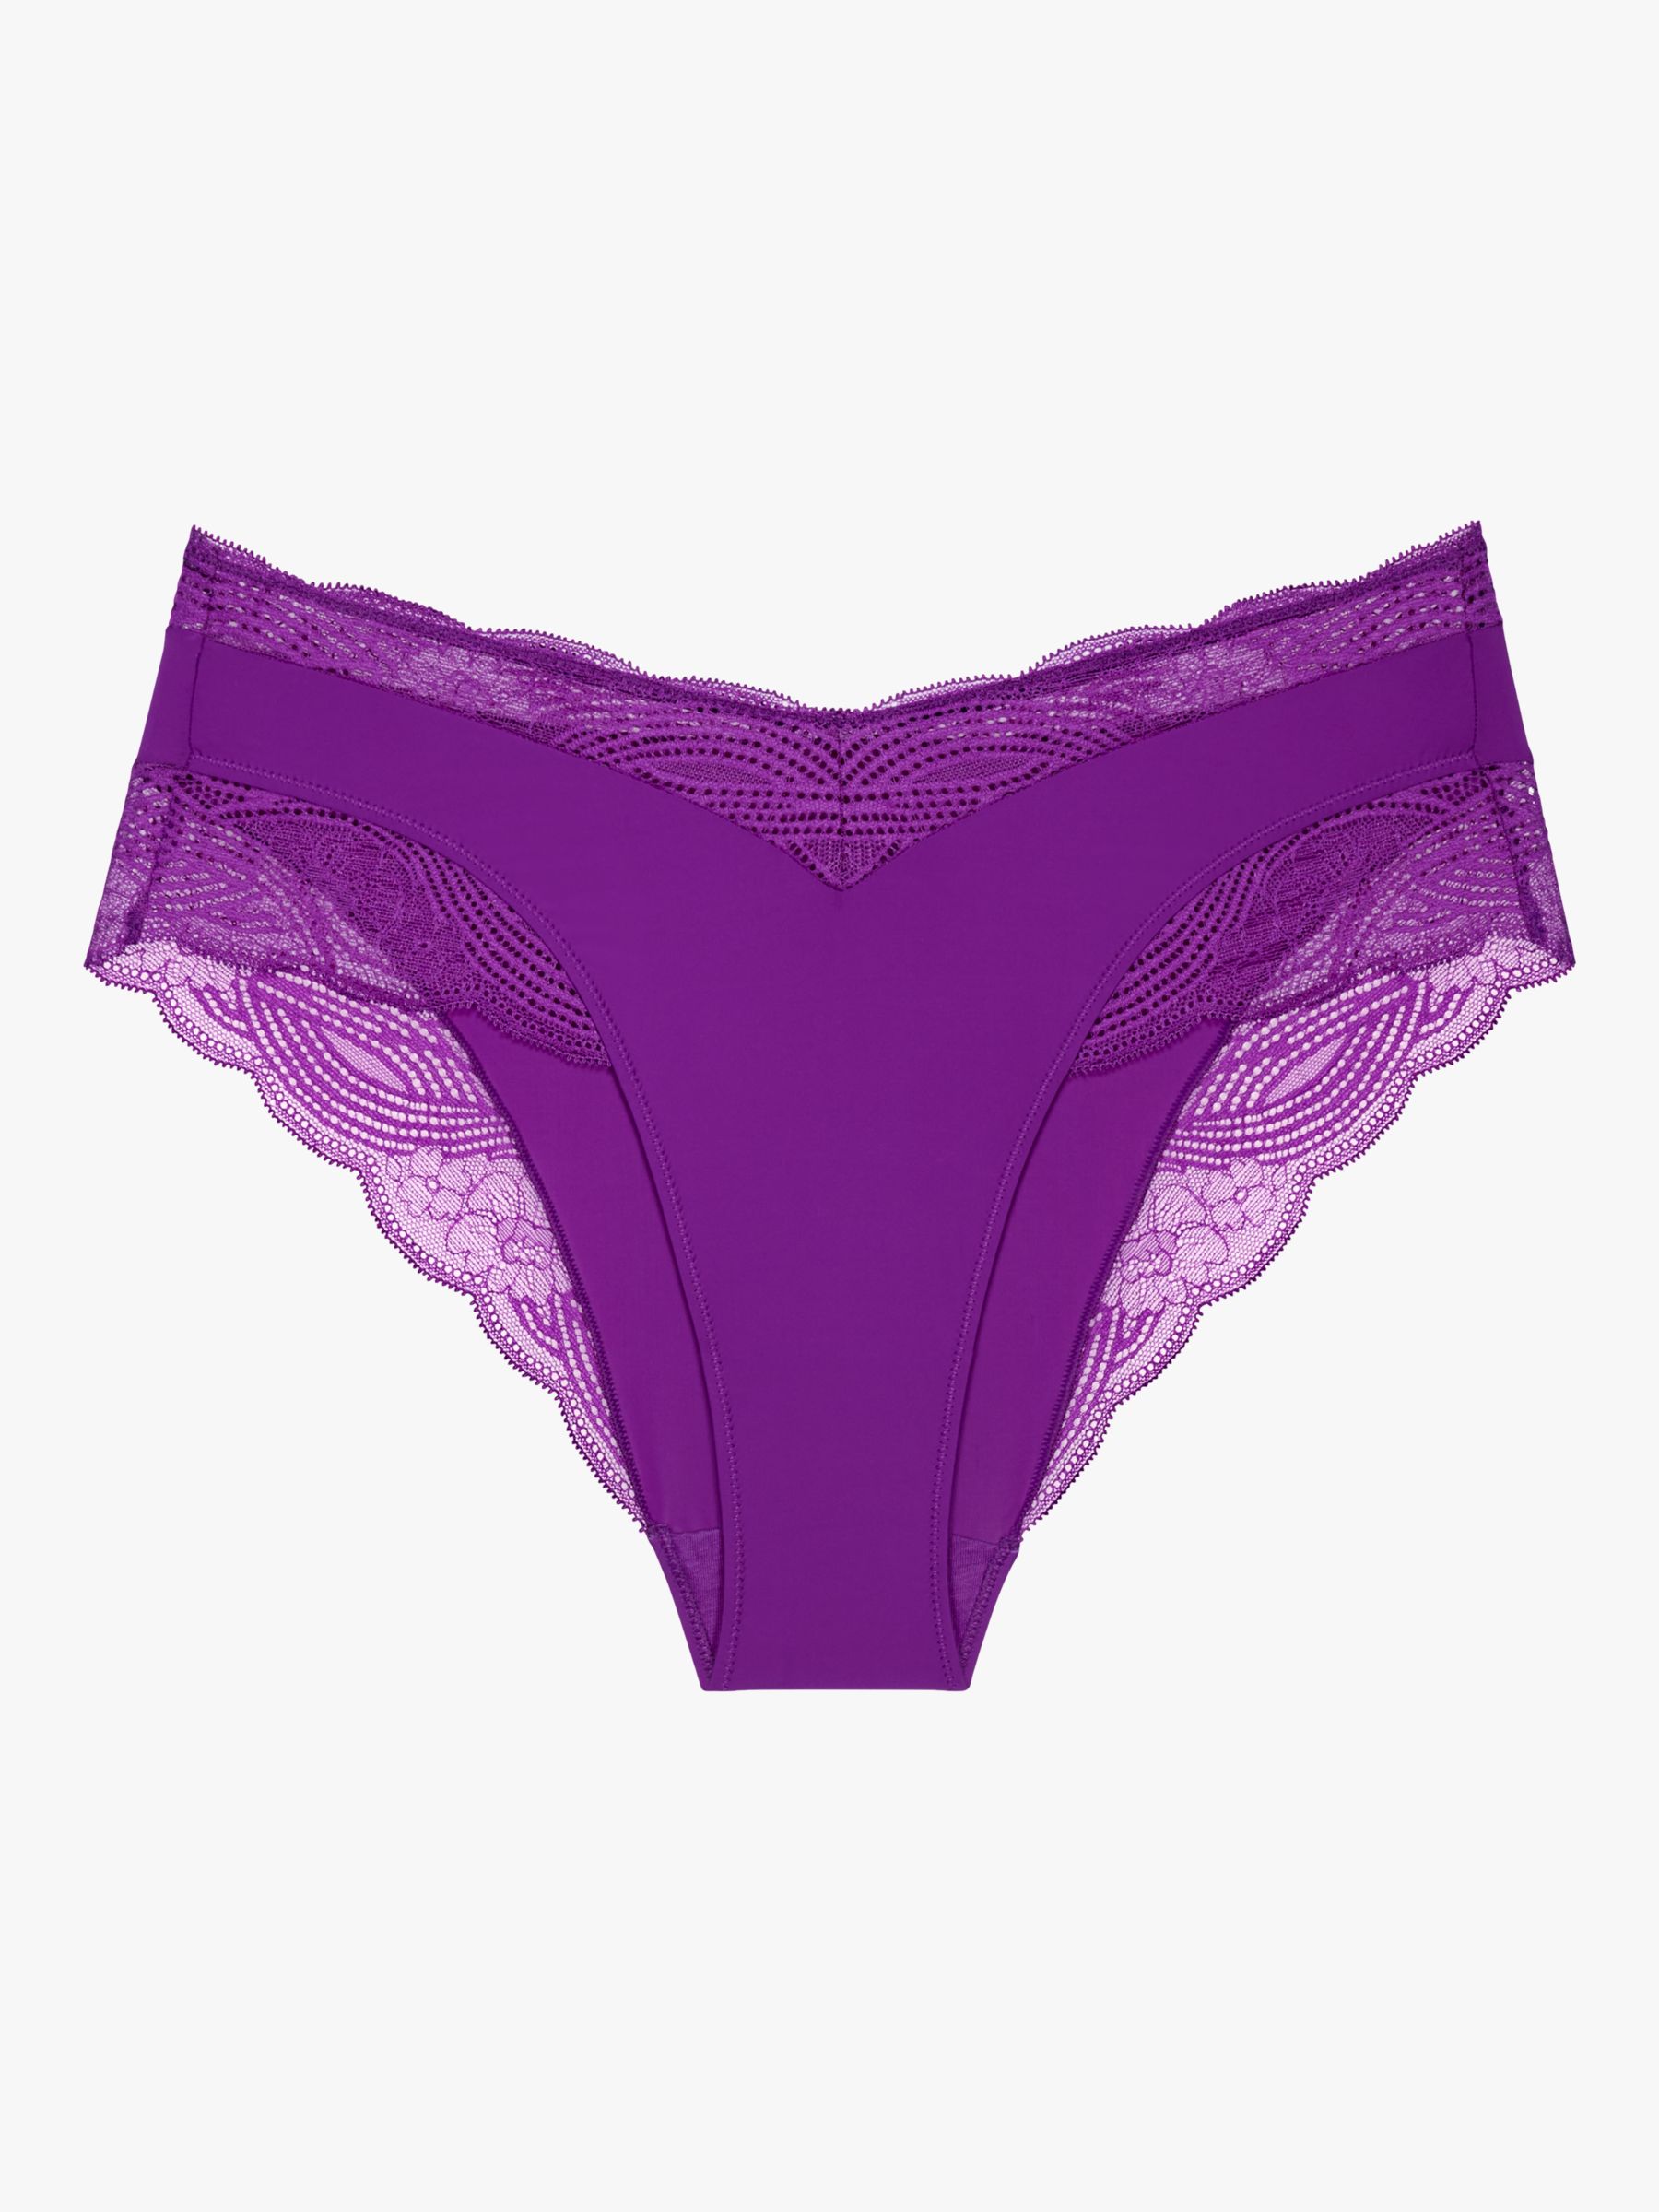 Luxe Lounge Underwear Haul: Olive, Purple, & Pink Lingerie Try-On